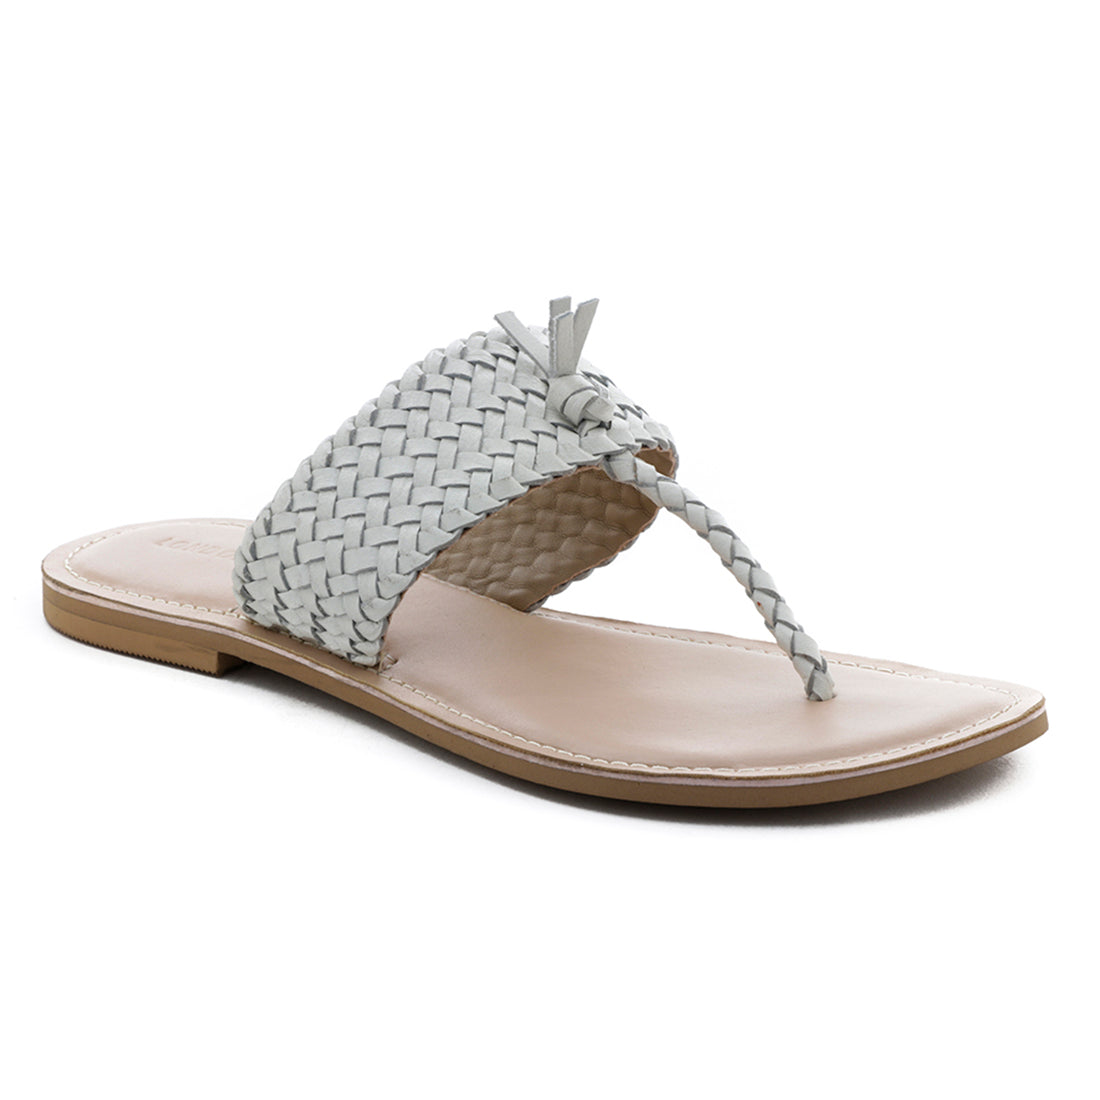 White Weaved Thong Sandal - Beige